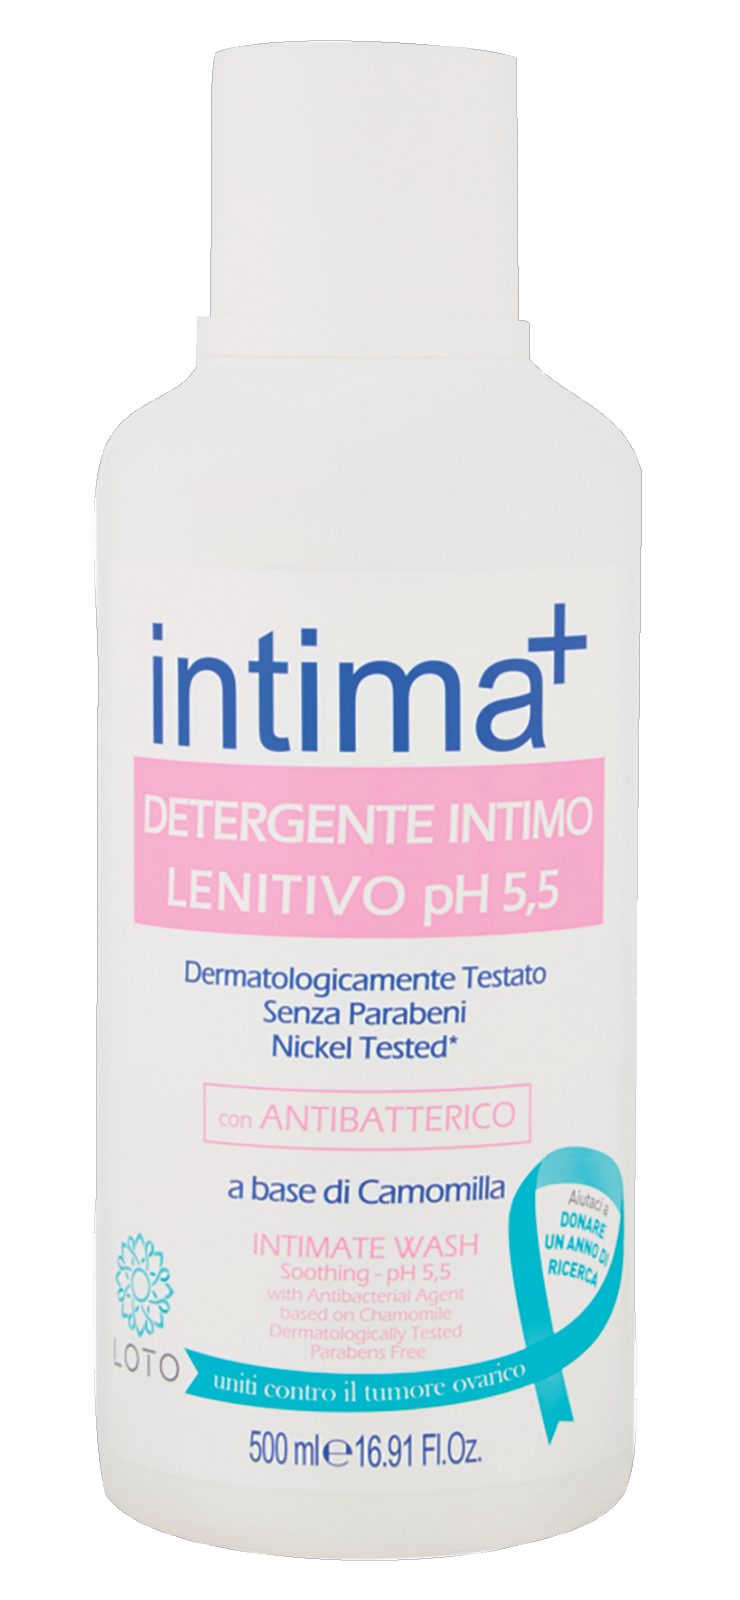 Detergente Intimo Lenitivo Intima+